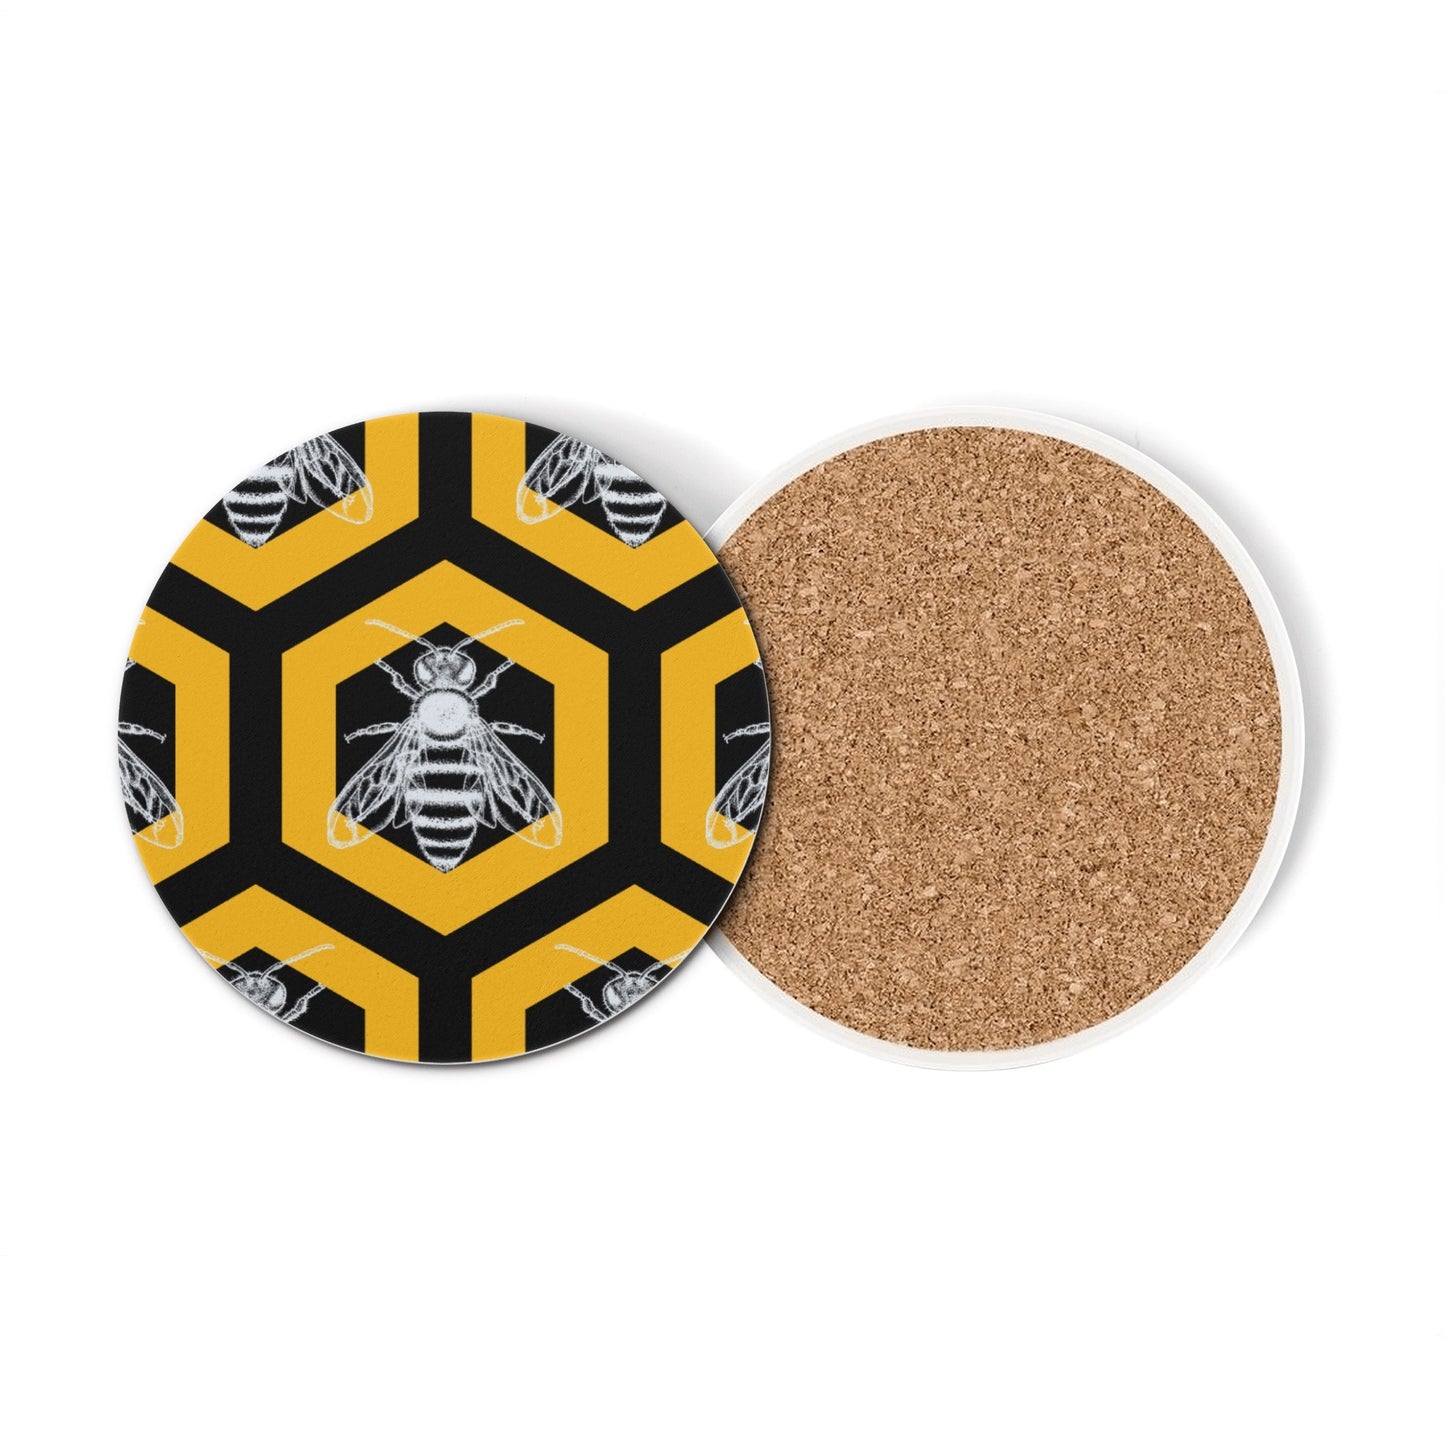 Deseret Coasters - Round Ceramic Coasters with Honeybee Hexagon Pattern - Set of 4